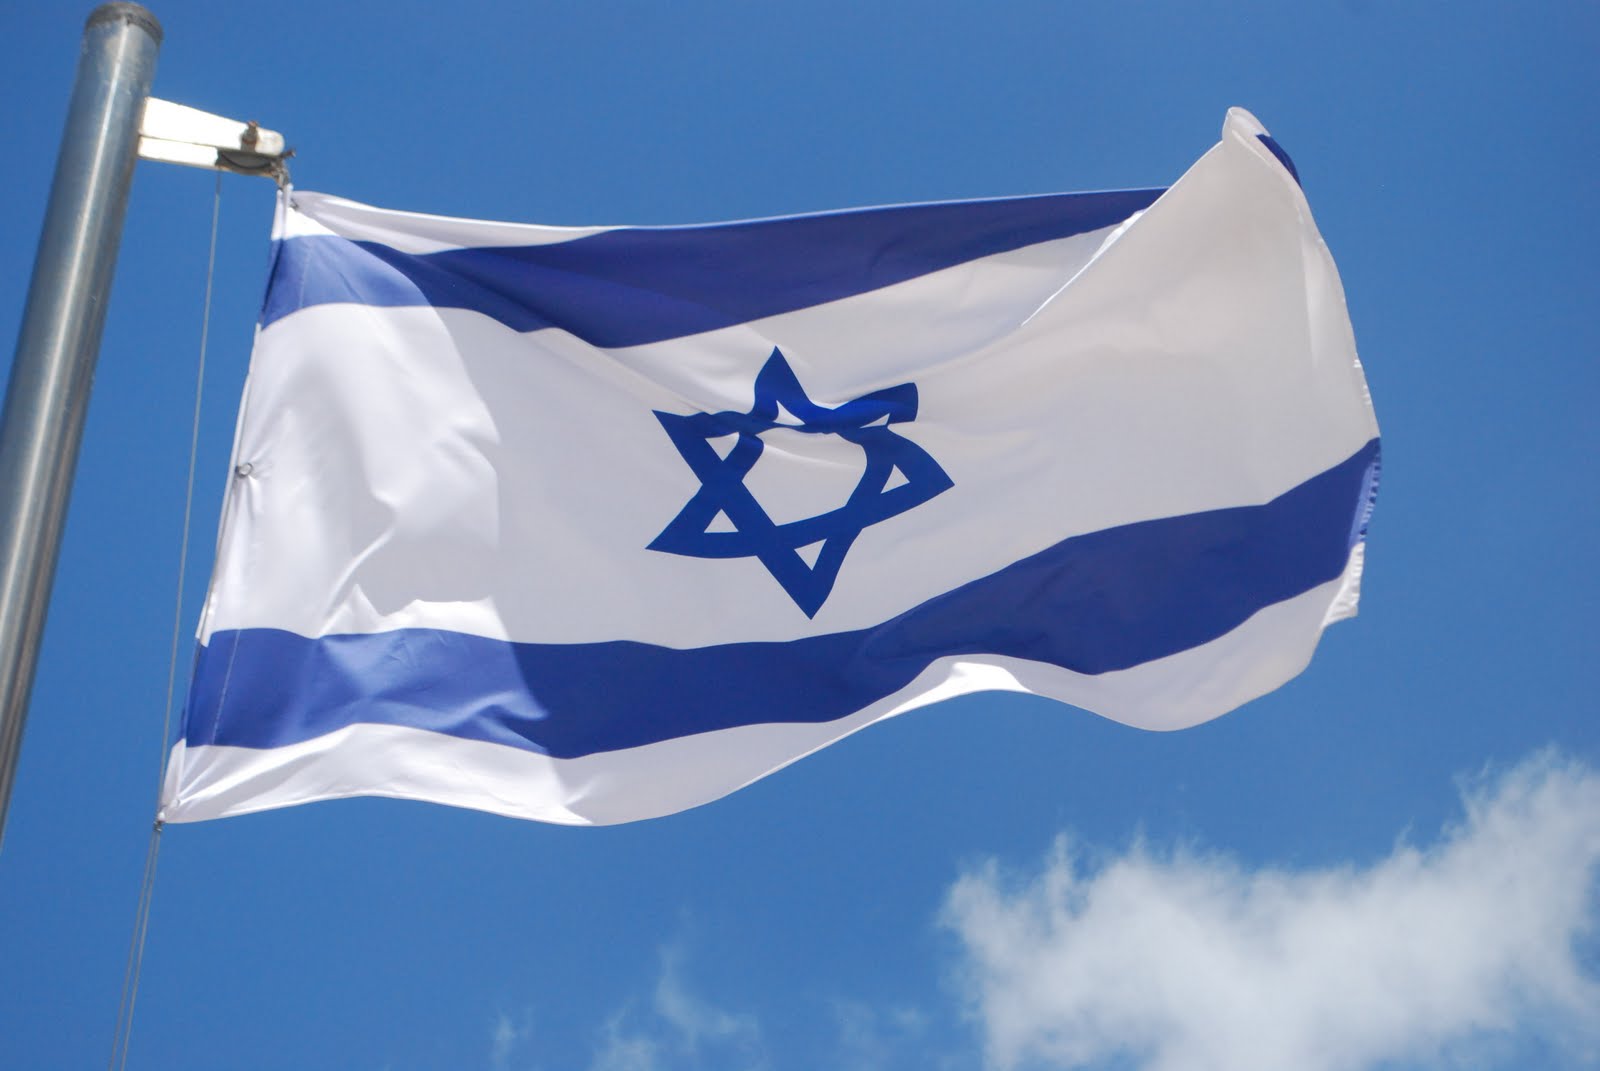 https://zlj13051967.files.wordpress.com/2015/10/cfbc0-israel-flag-graafix-blogspot-com-flags-of-86079.jpg?w=875&h=585